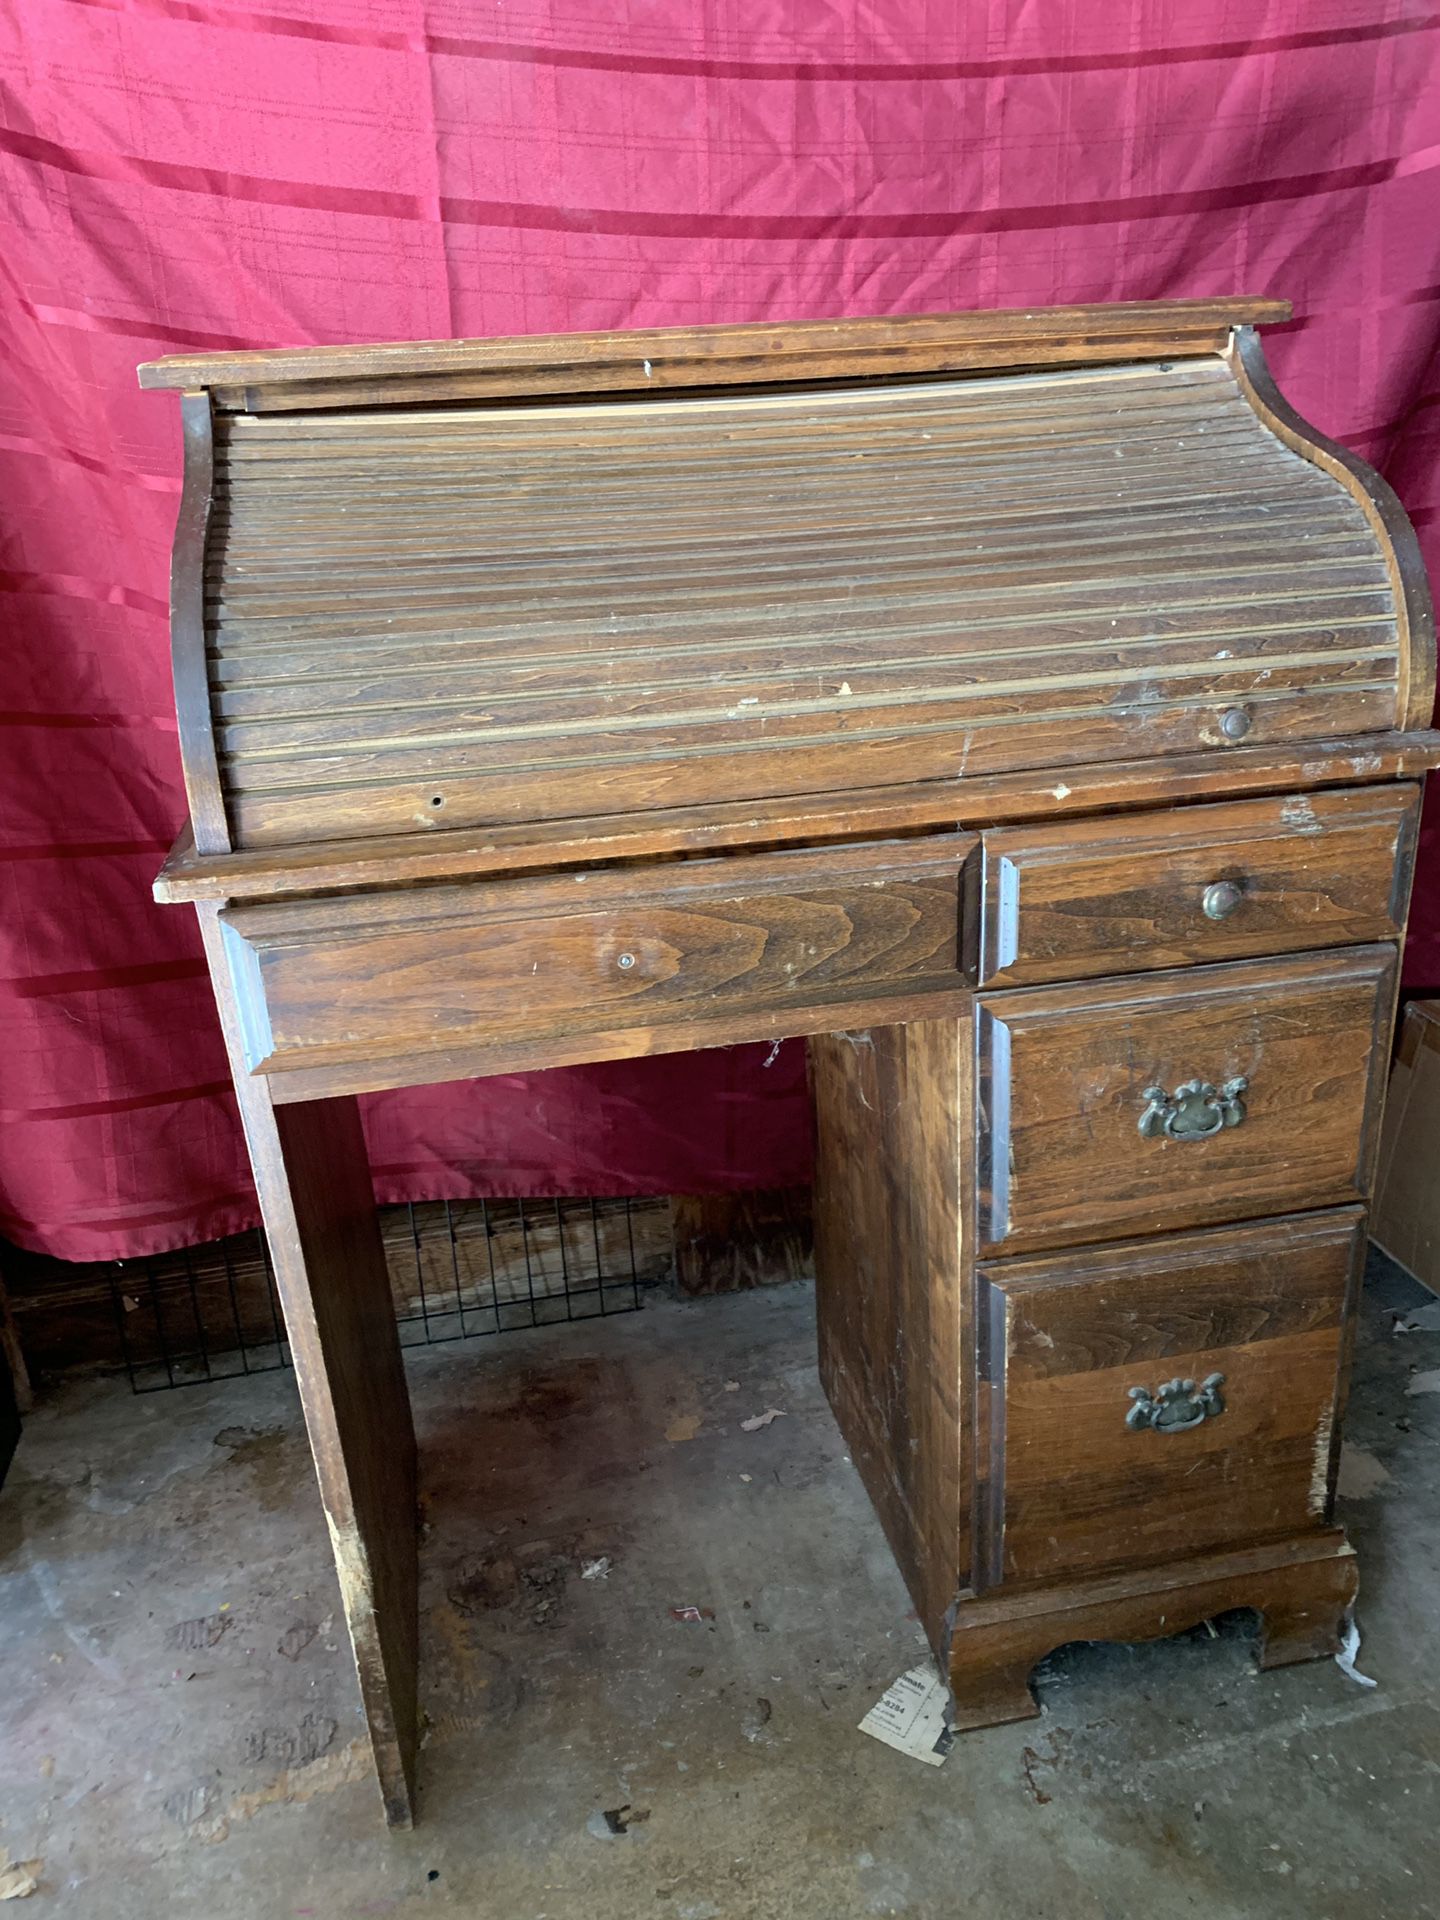 Desk antique wood type with slide